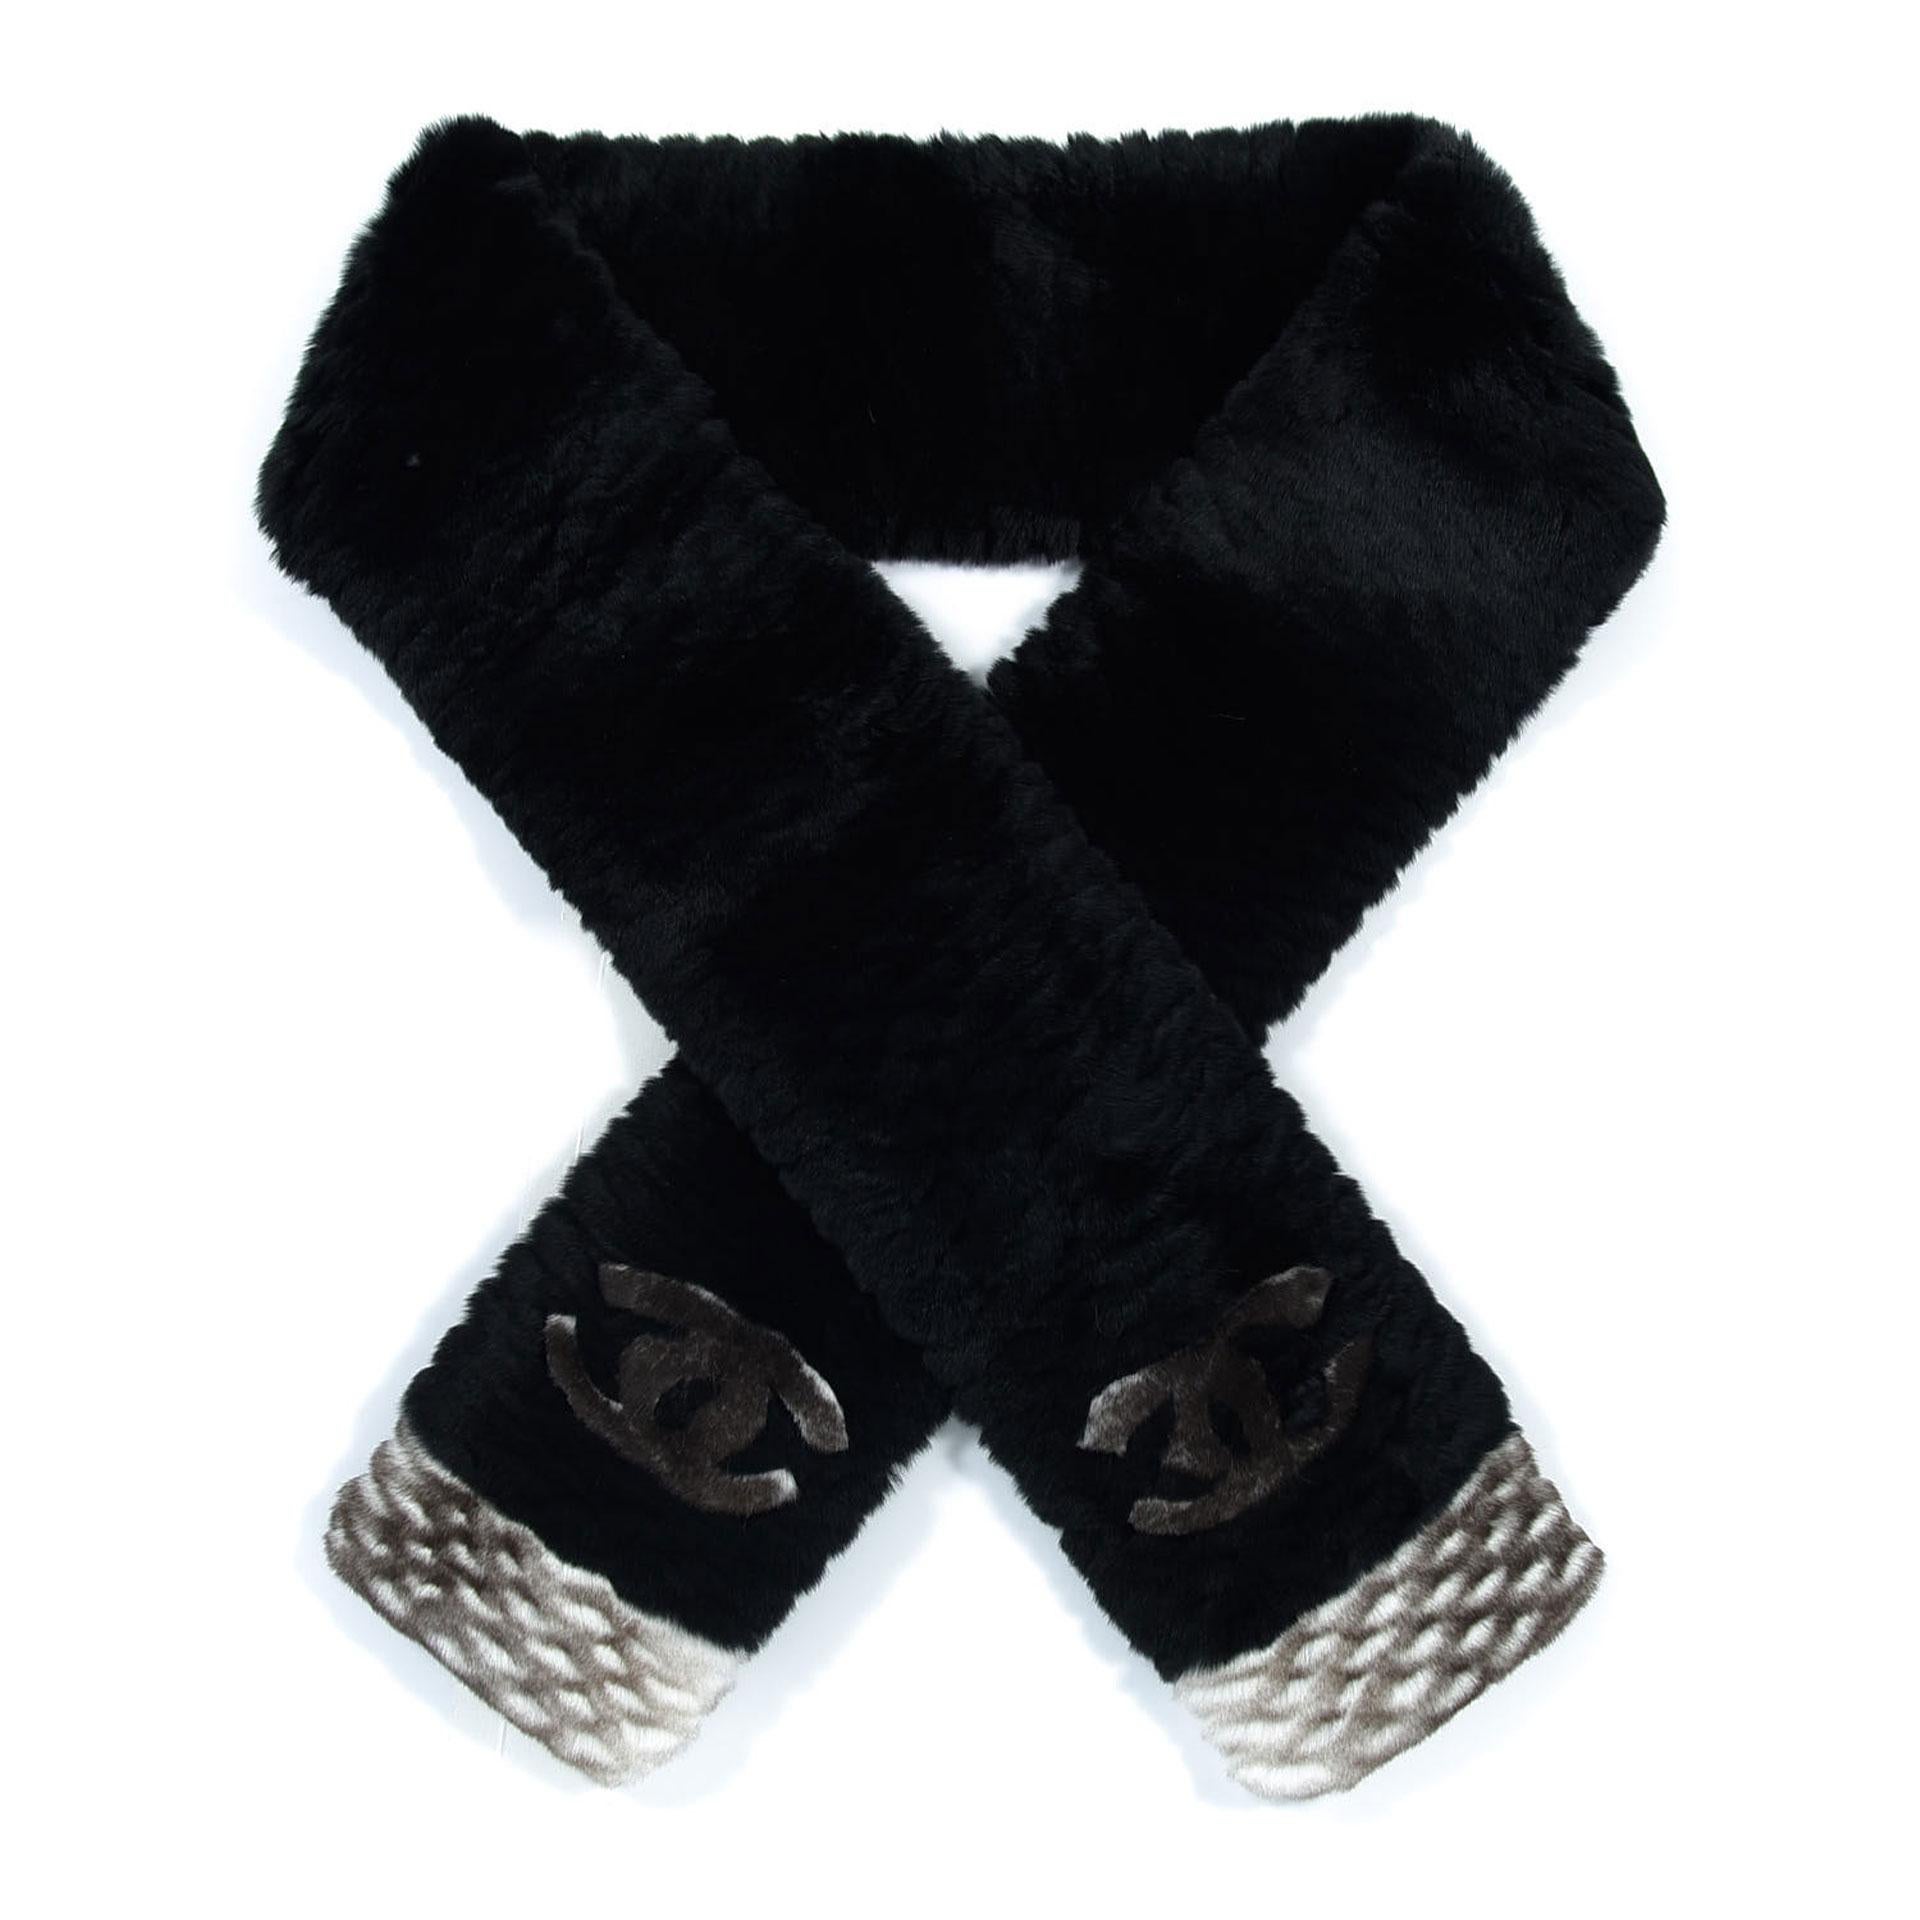 Chanel 2014 Iconic Black Elegant Orylag Rabbit Fur CC Stole Scarf Winter Wrap In Good Condition For Sale In Miami, FL